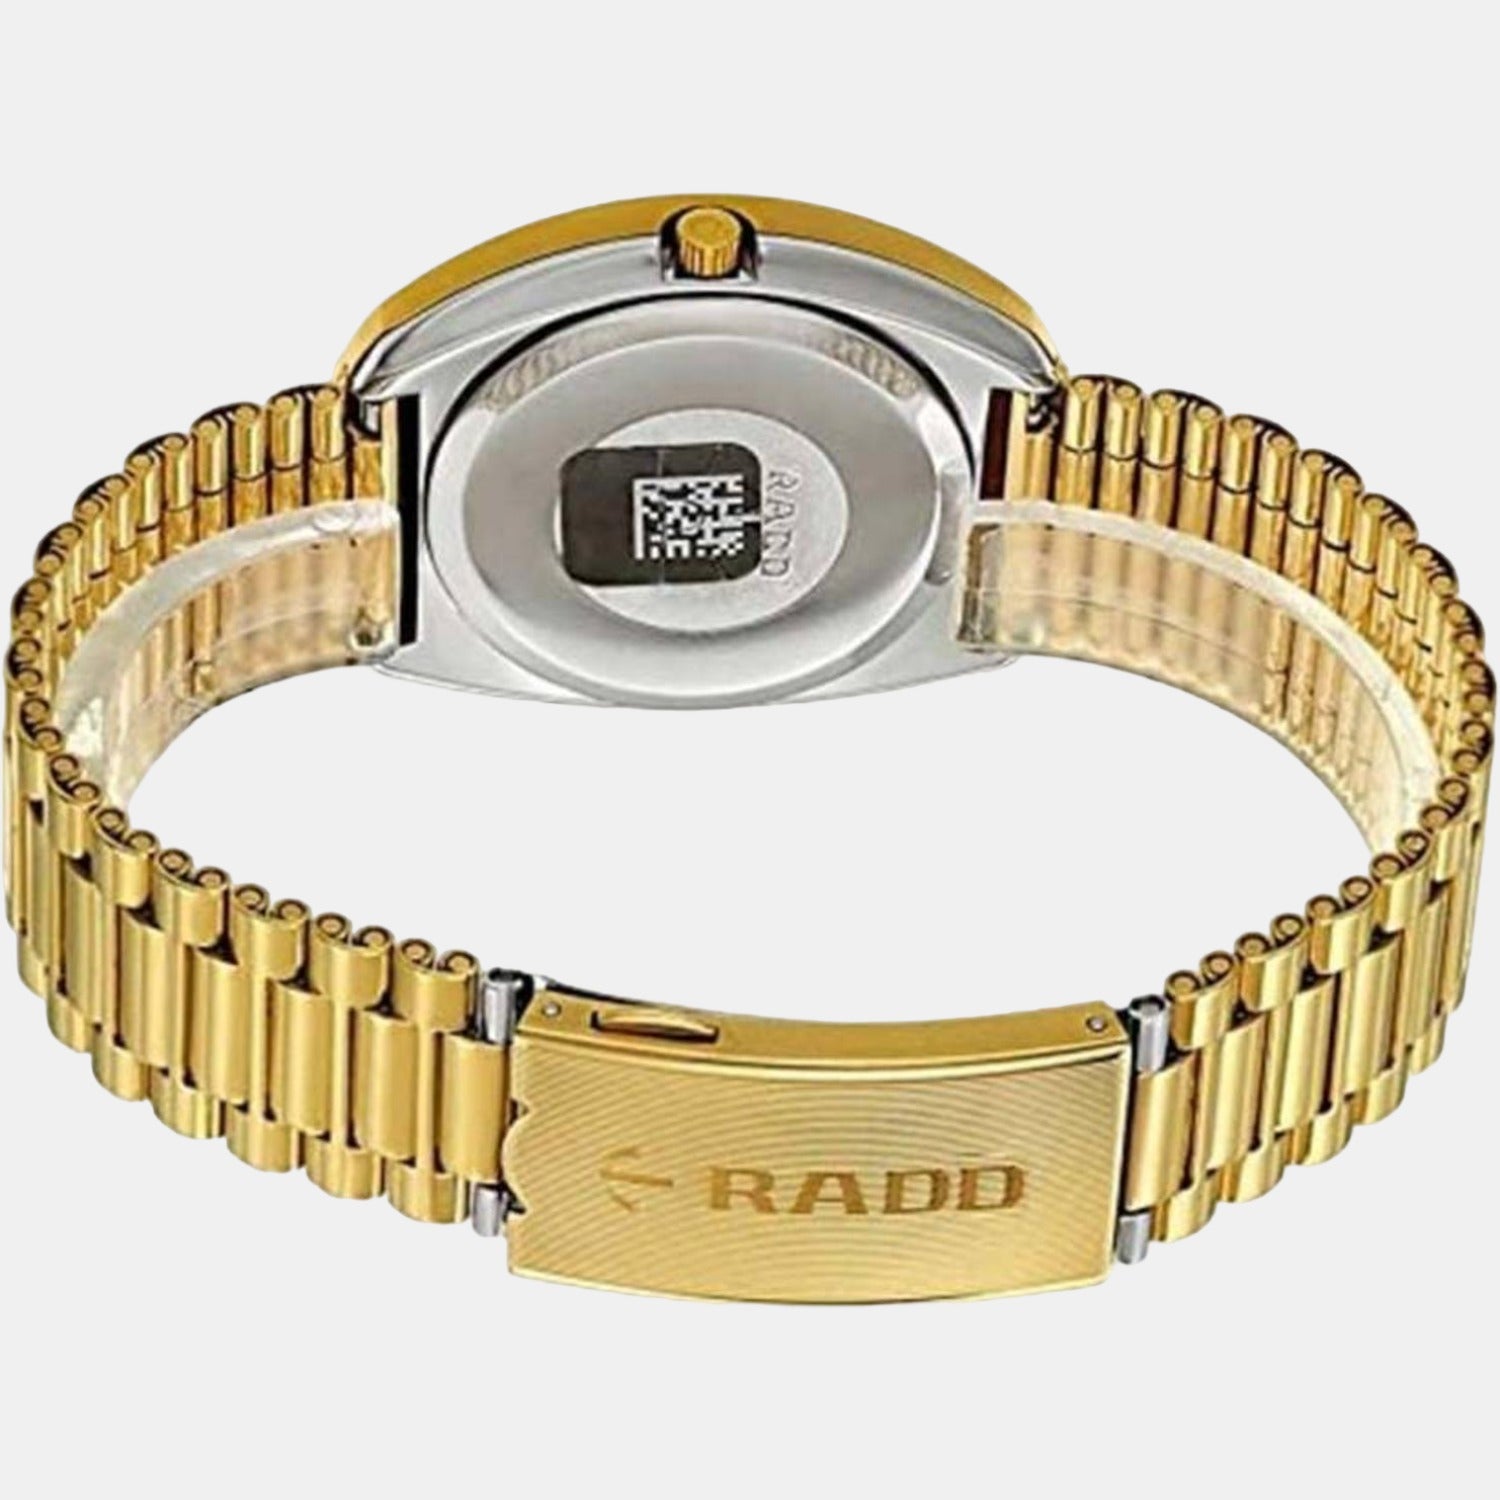 Artzz Radd Men's Stylish Black/Silver Watch - Rishte Shop